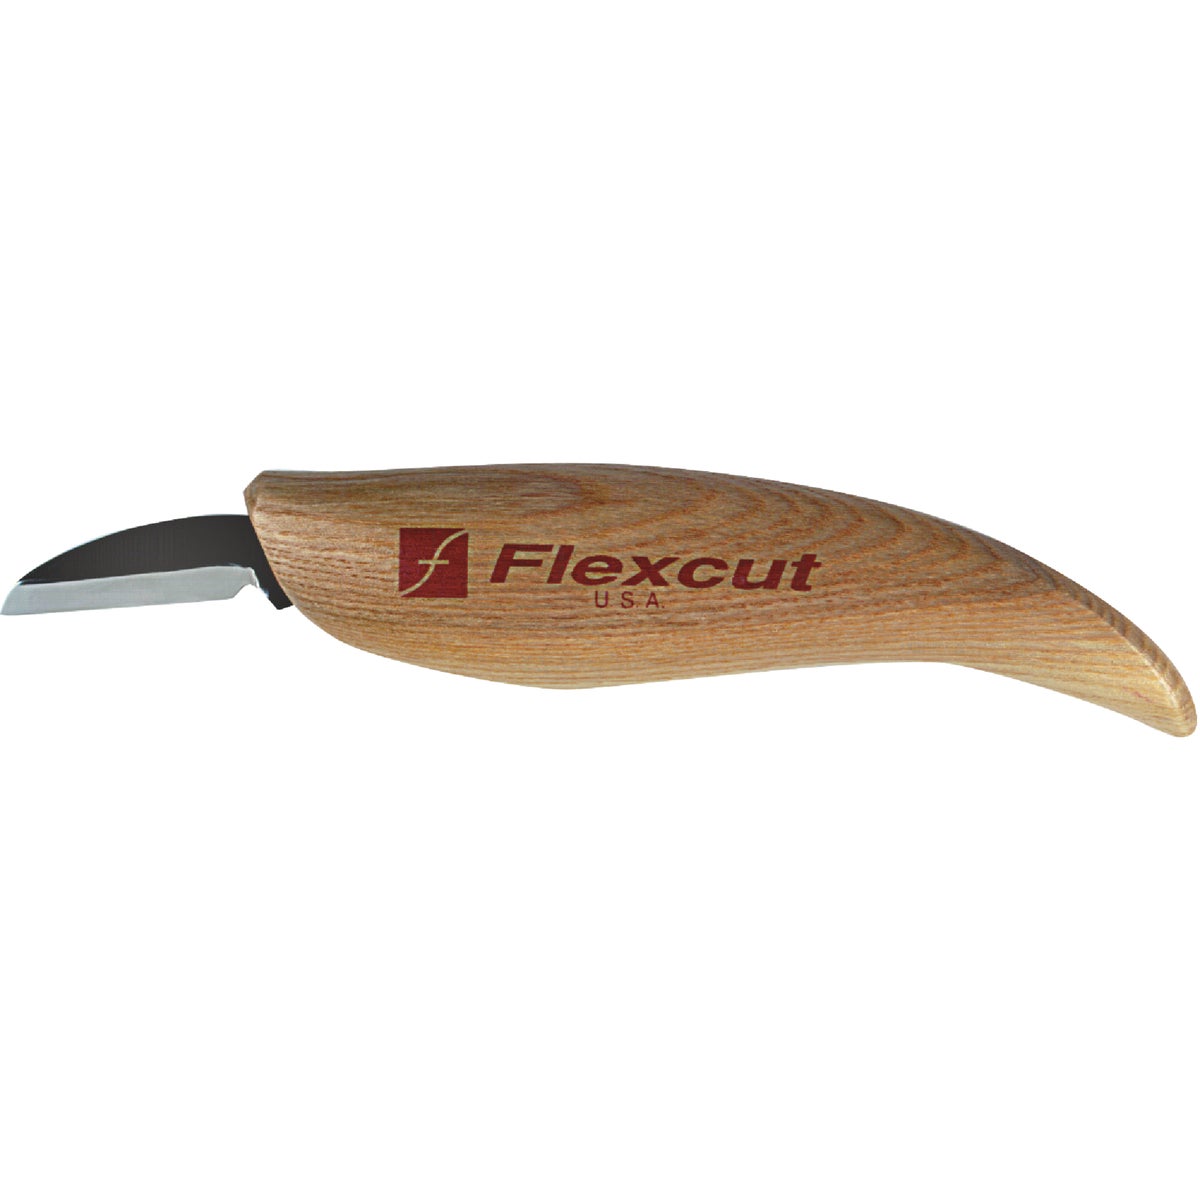 Flex Cut KN12 Flex Cut General Purpose Carving Knife with 1-1/4 In. Blade KN12